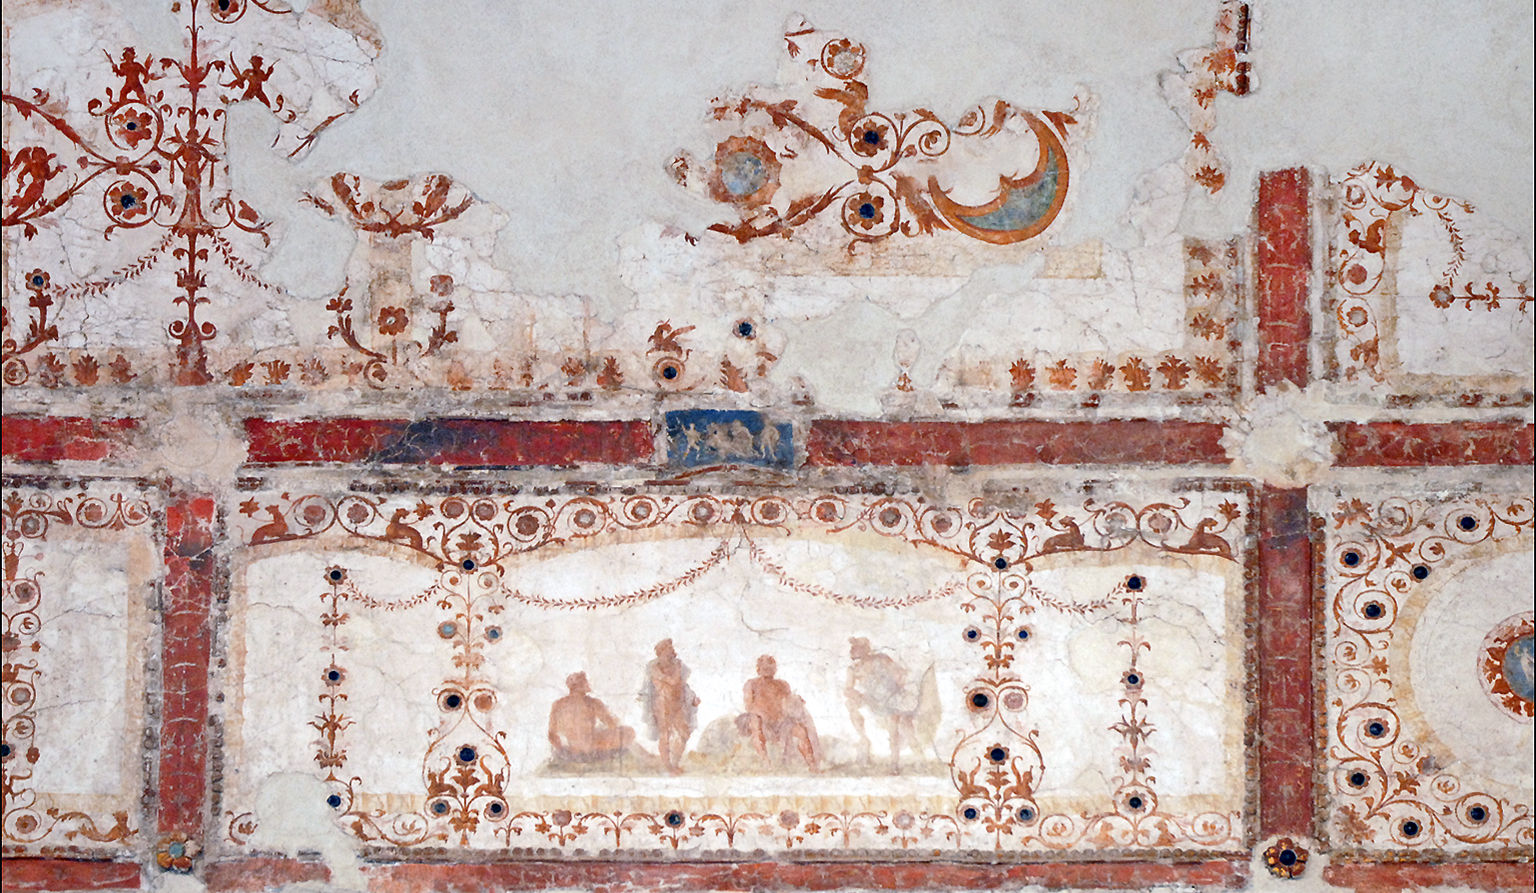 Decorative fresco from the Domus Transitoria on the Palatine Hill, Rome c. 60 C.E. (photo: dalbera, CC BY 2.0) <https://commons.wikimedia.org/wiki/File:Peintures_murales_de_la_Domus_Transitoria_(Rome)_(5979997231).jpg>